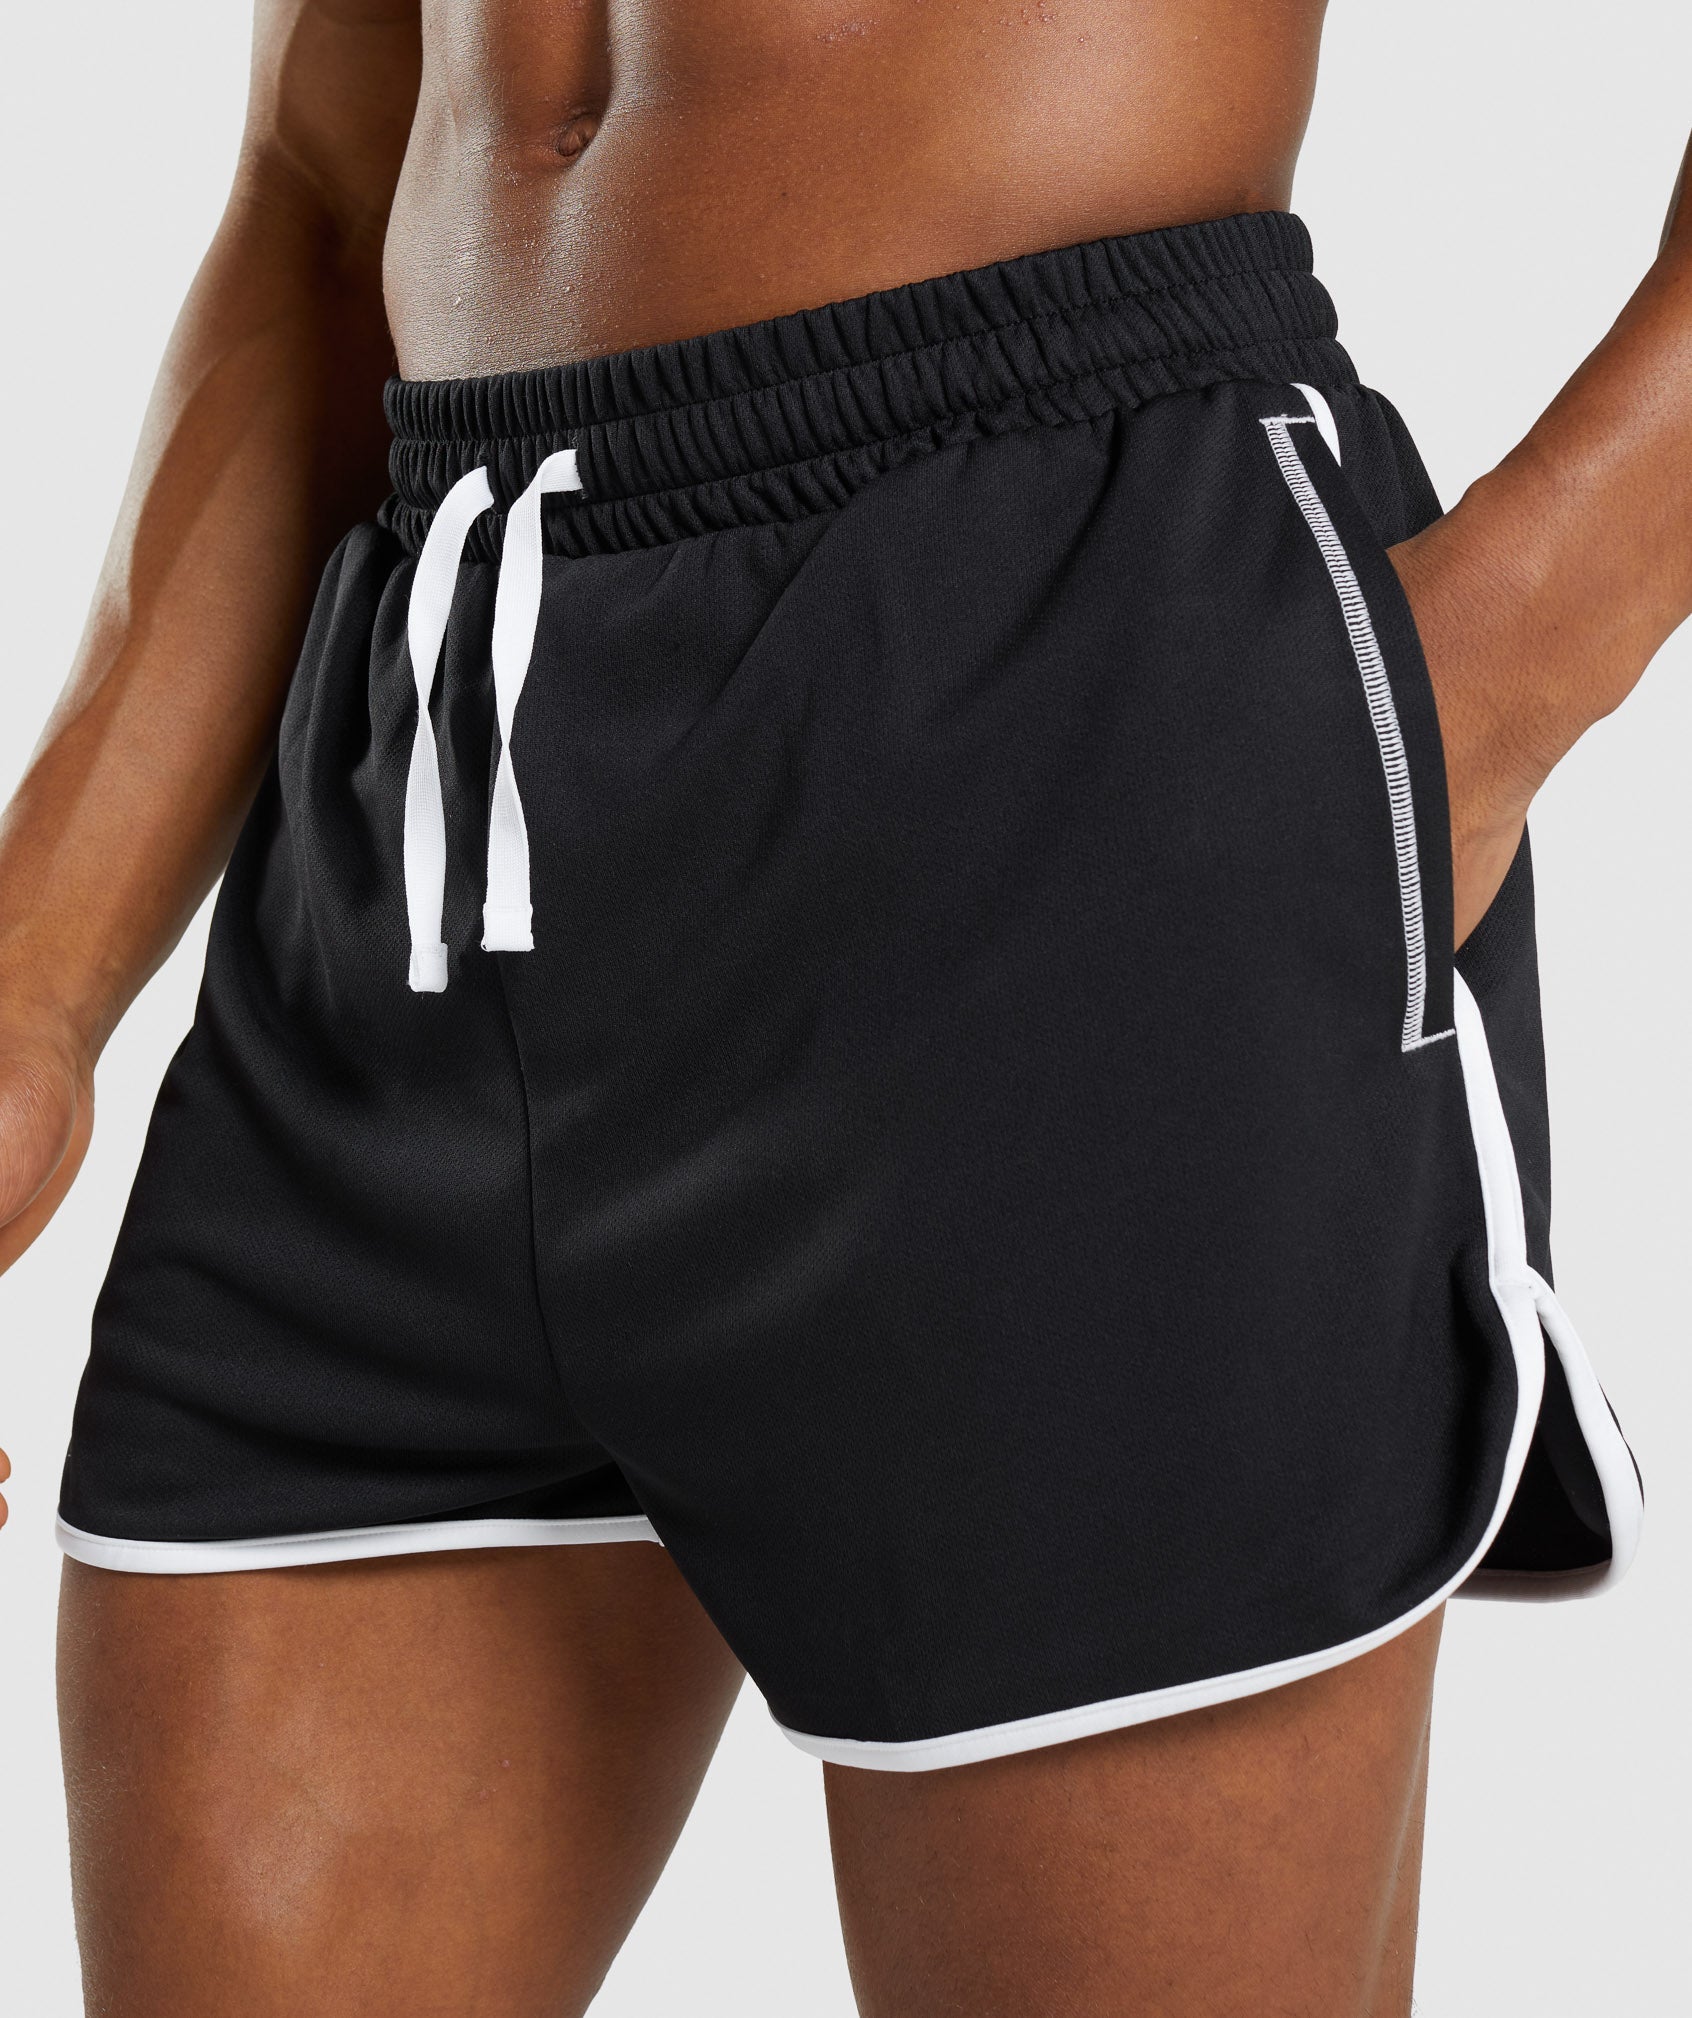 Gymshark Recess 3 Shorts - Black/White